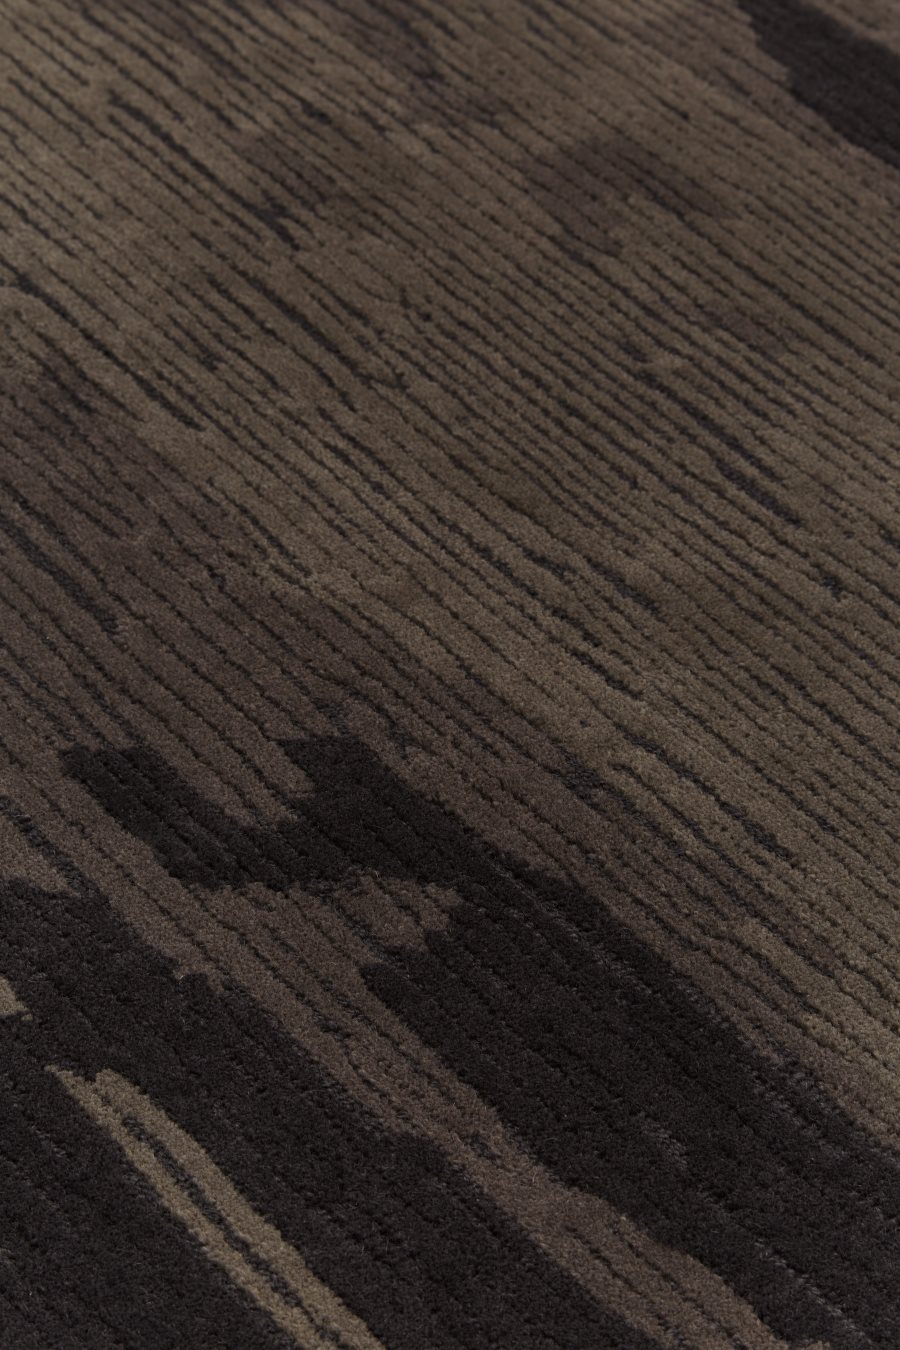 designer rugs chrome Rhodium dark grey close up oh wr.jpg 1